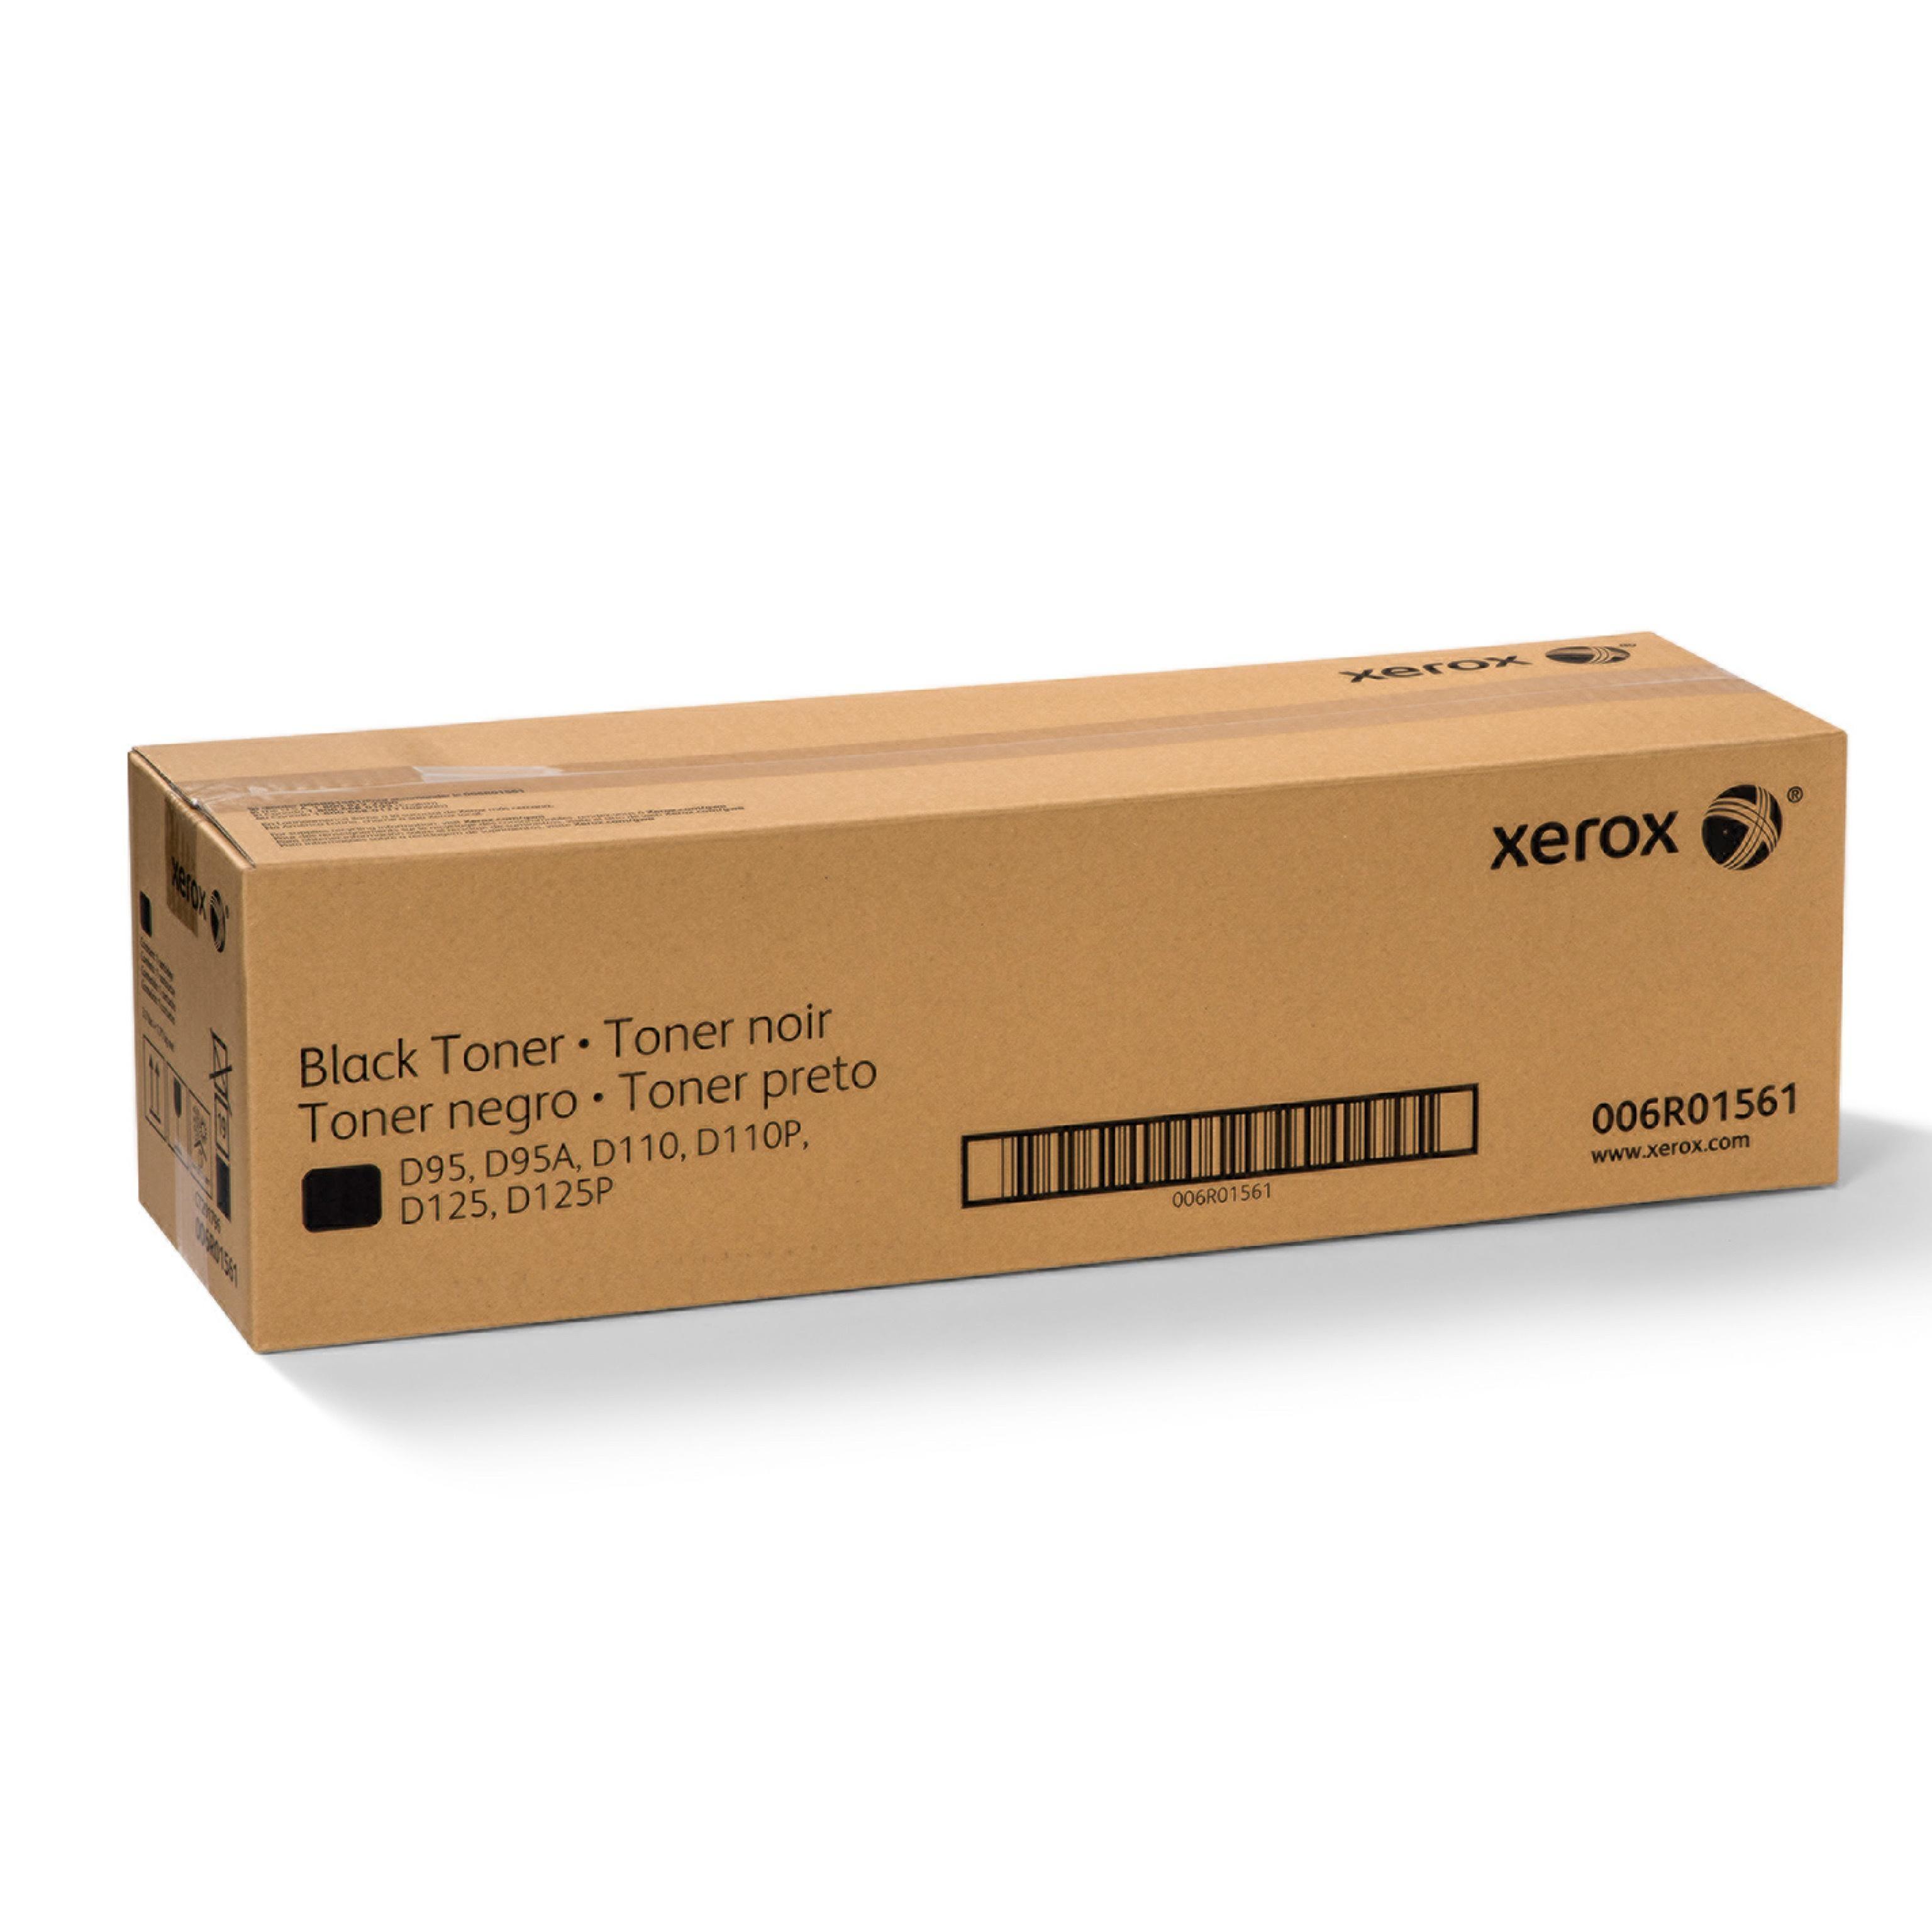 006R01561 - Toner Nero - Xerox® D95/D110/D125